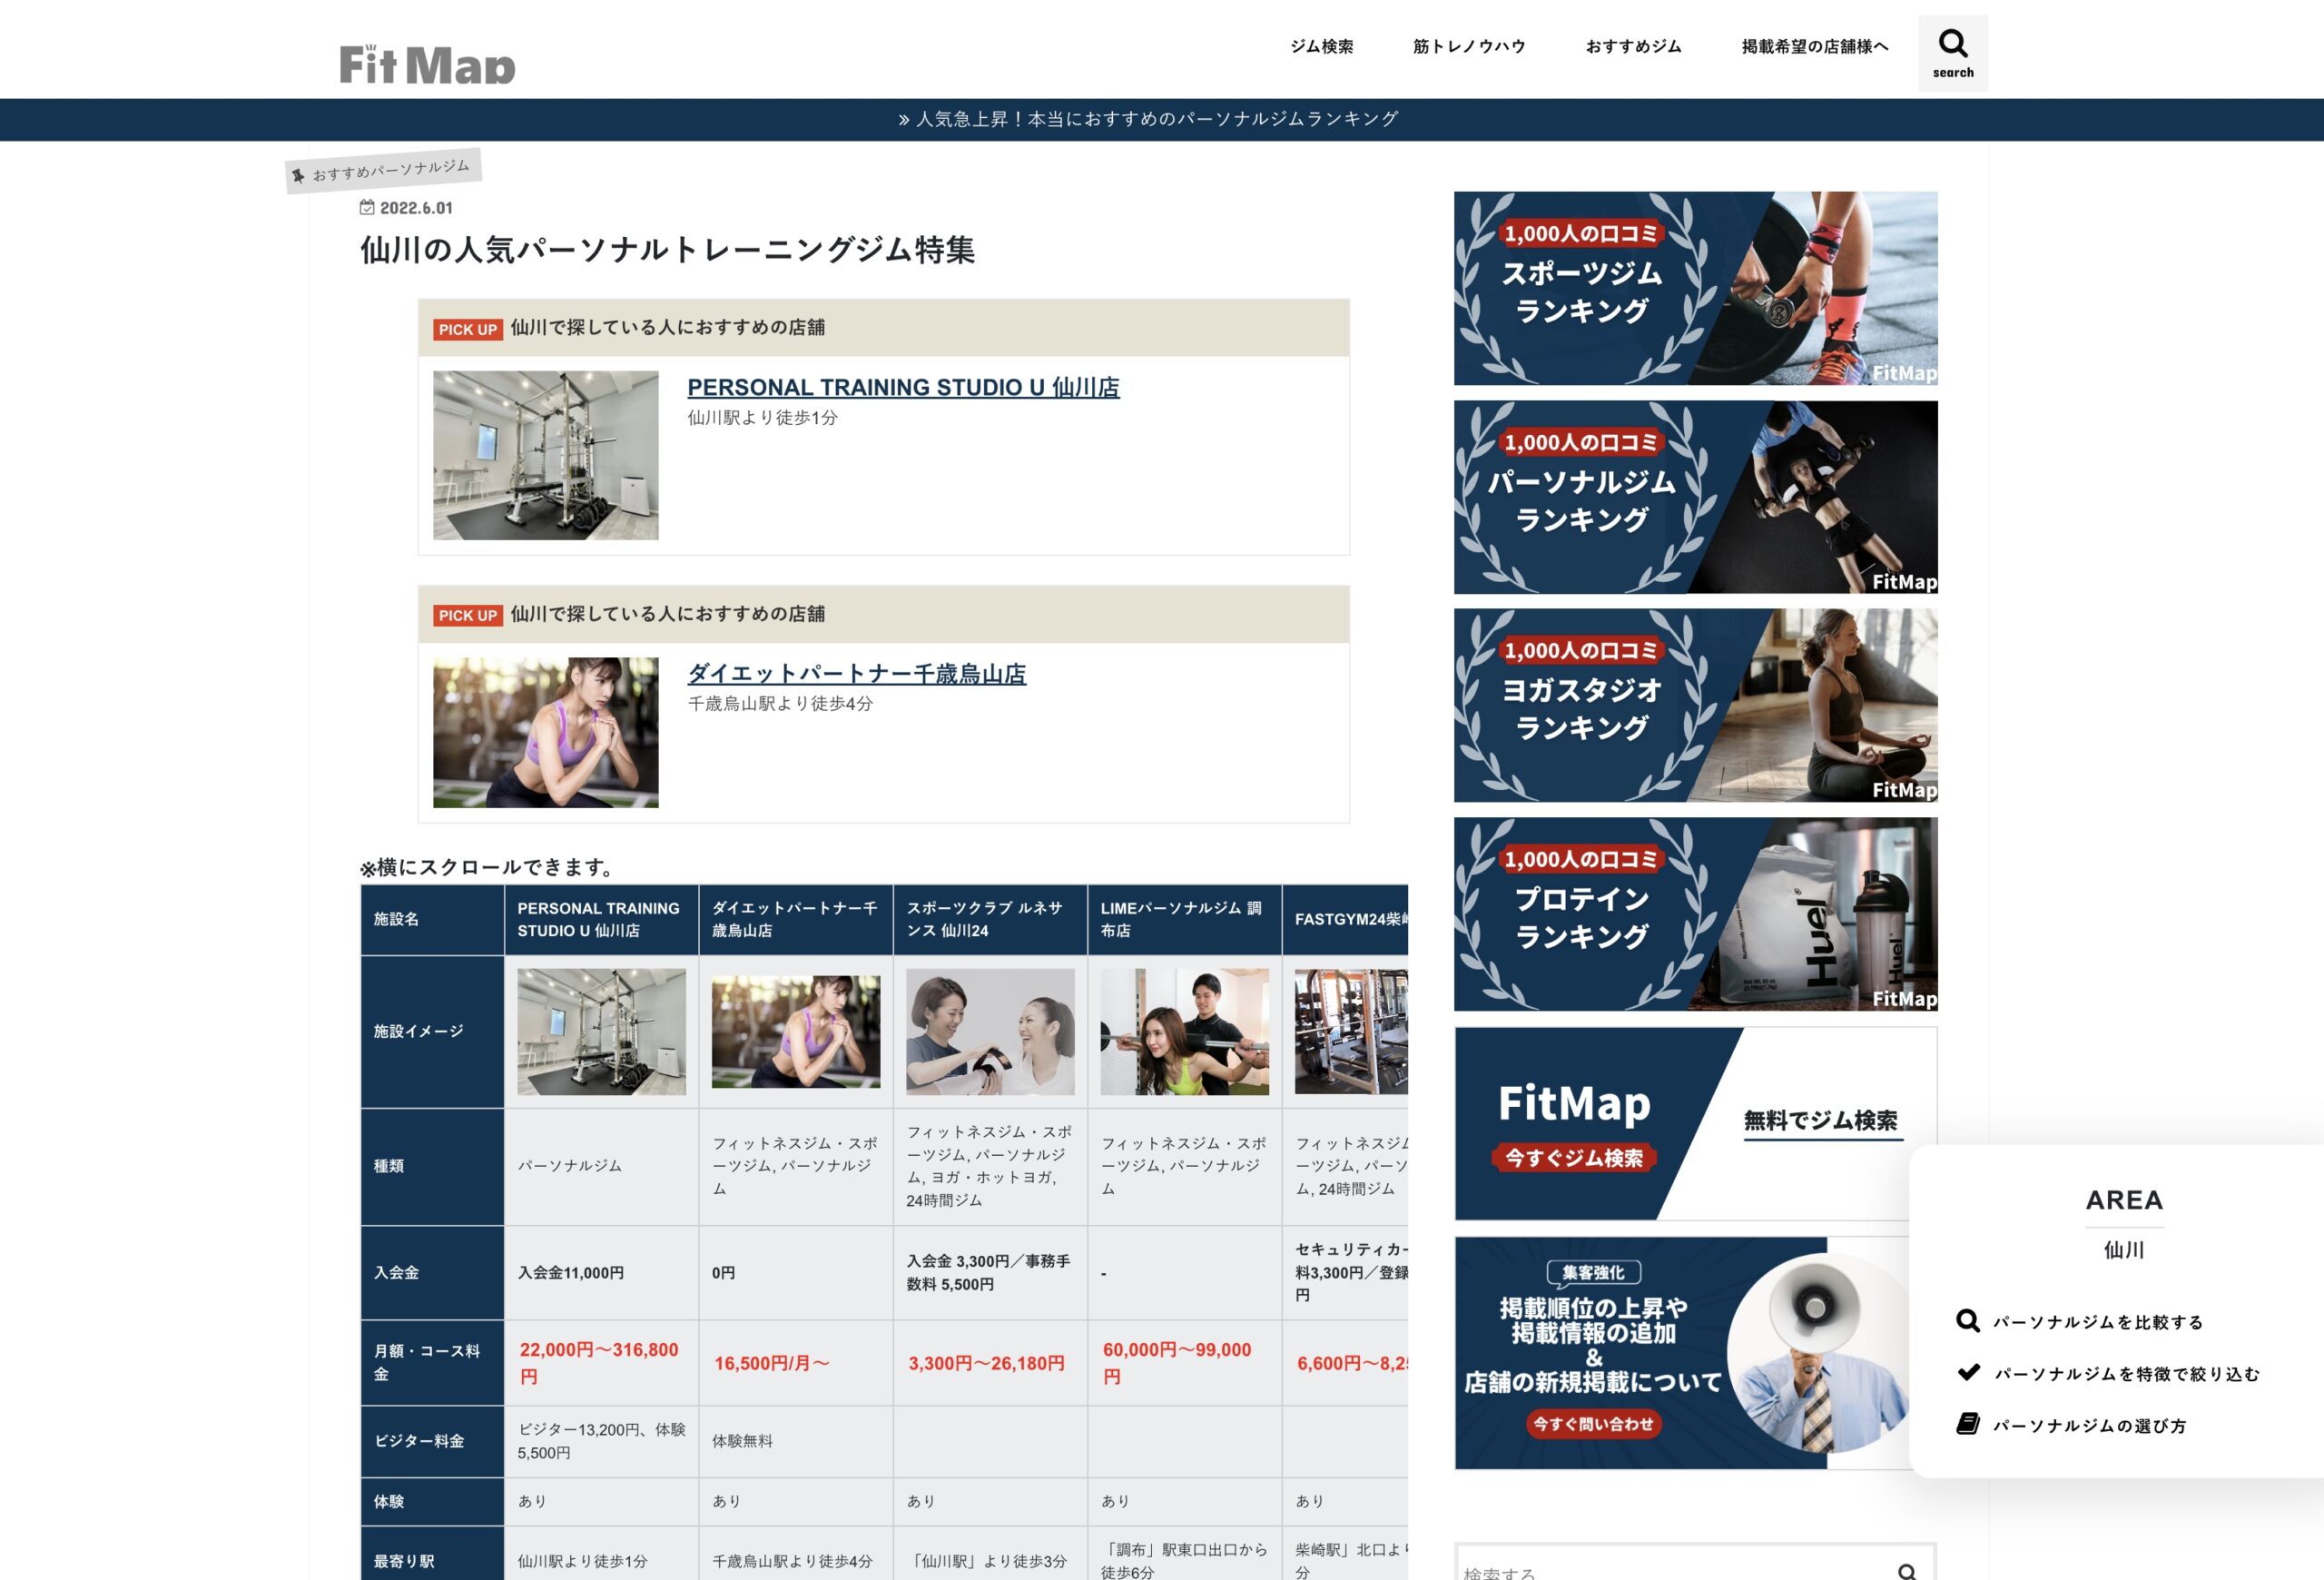 PERSONAL TRAINING STUDIO U 仙川店がフィットネスメディアFitMap様に掲載されました